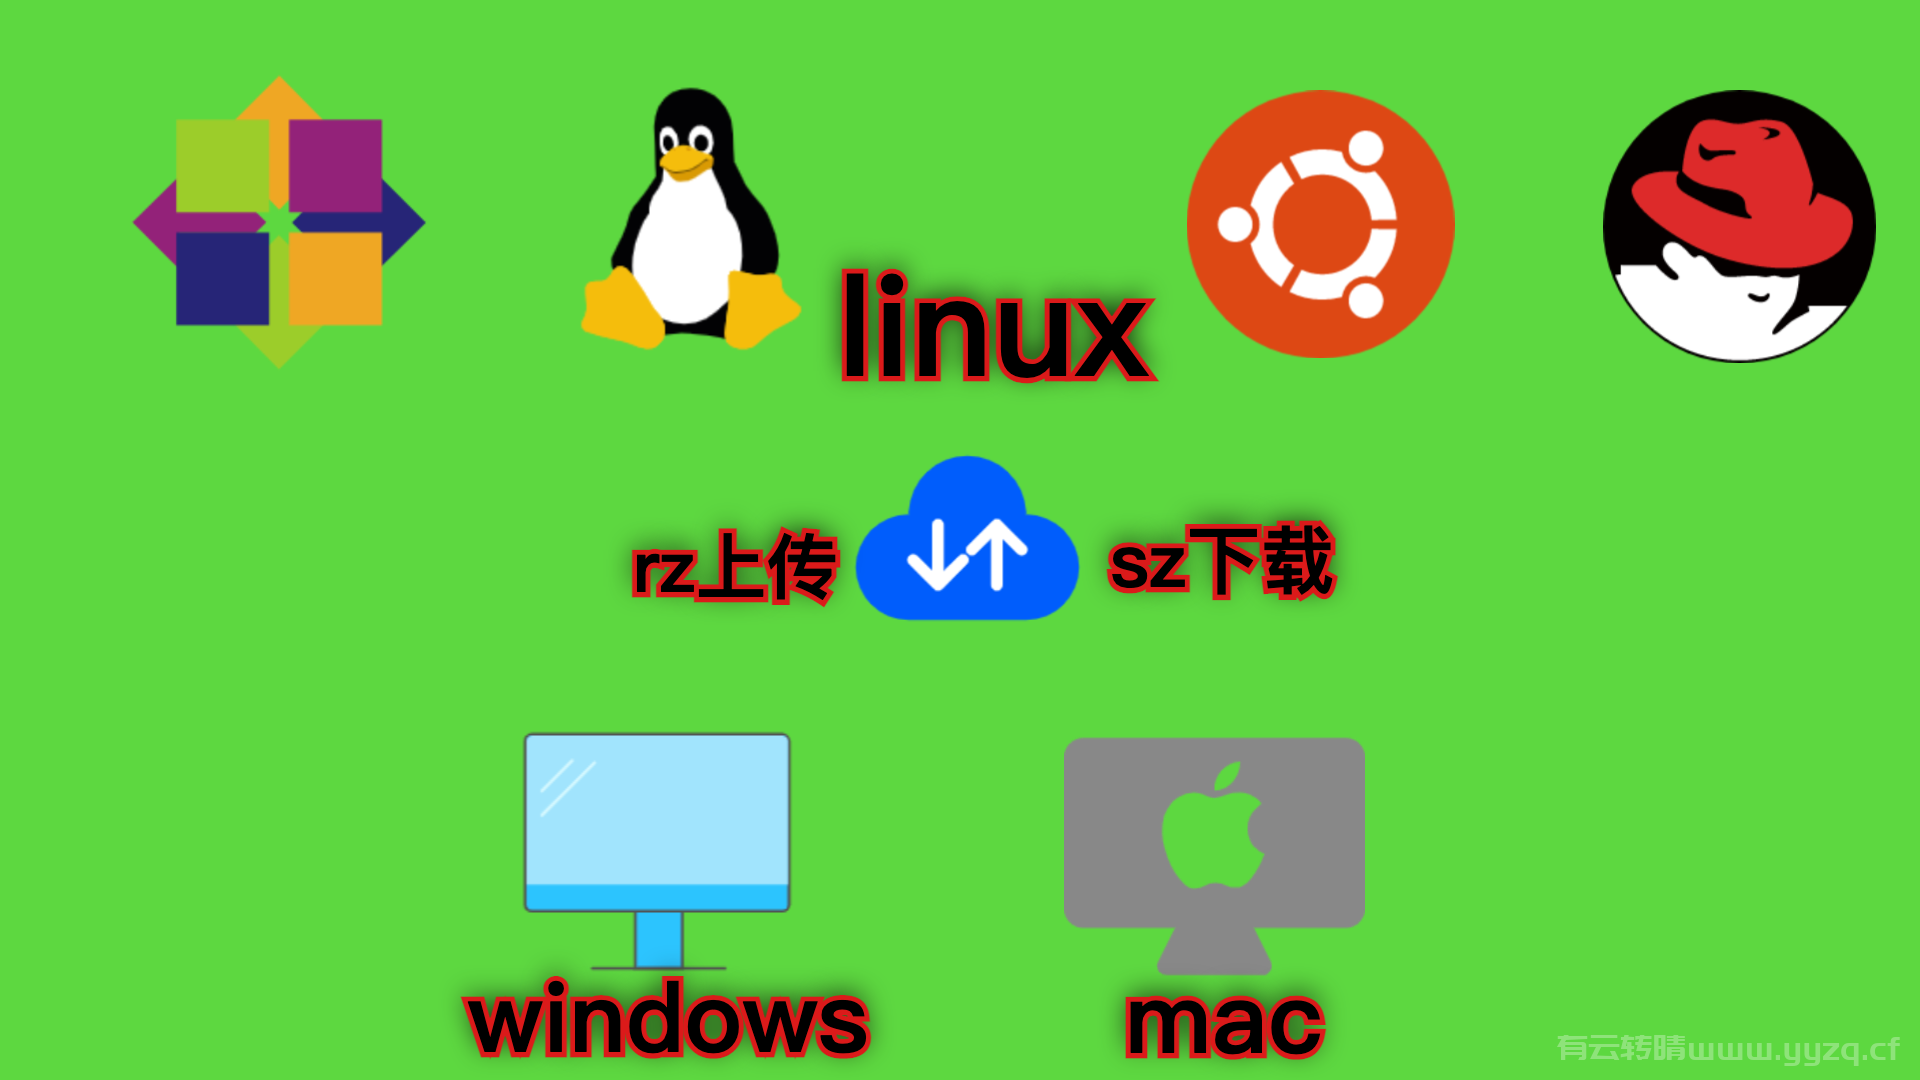 linux服务器中分别用rz和sz来上传和下载文件